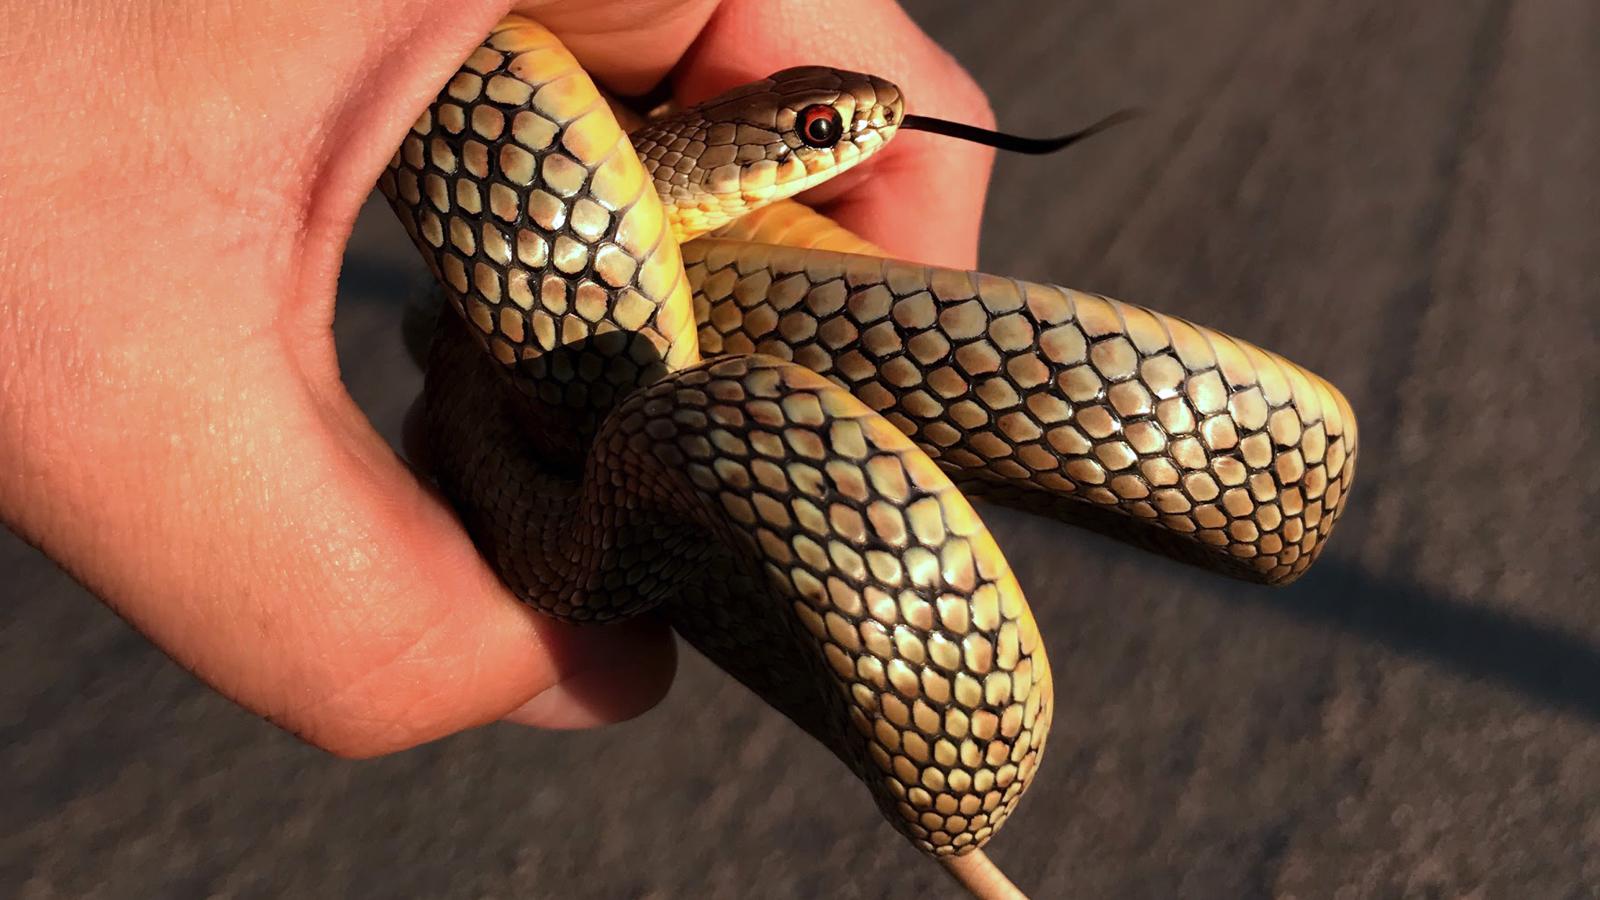 Snakes Of Colorado Museum Of Natural History University Of Colorado Boulder